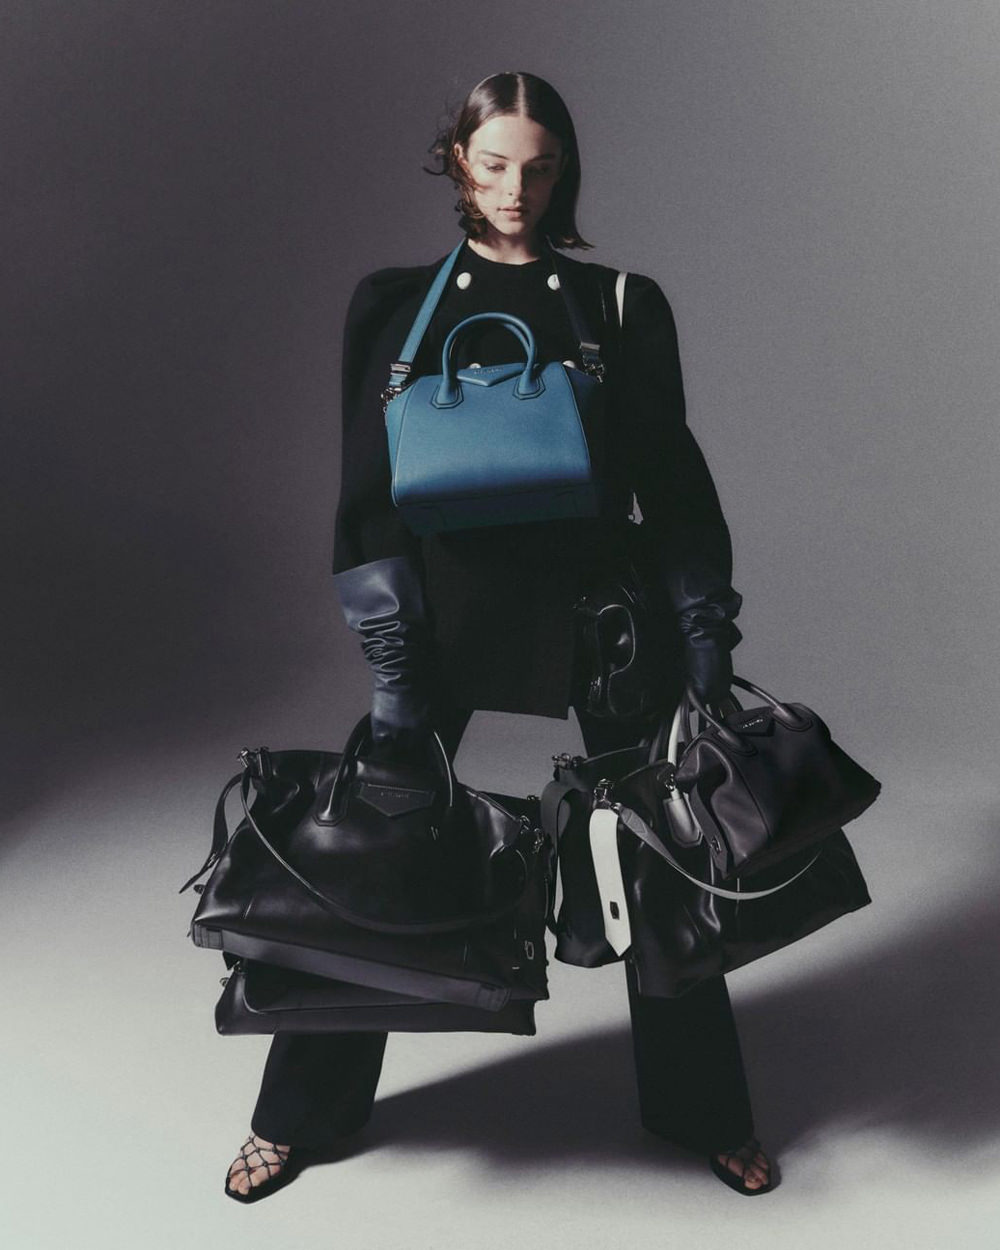 Givenchy Antigona Large Tote Bag in Blue